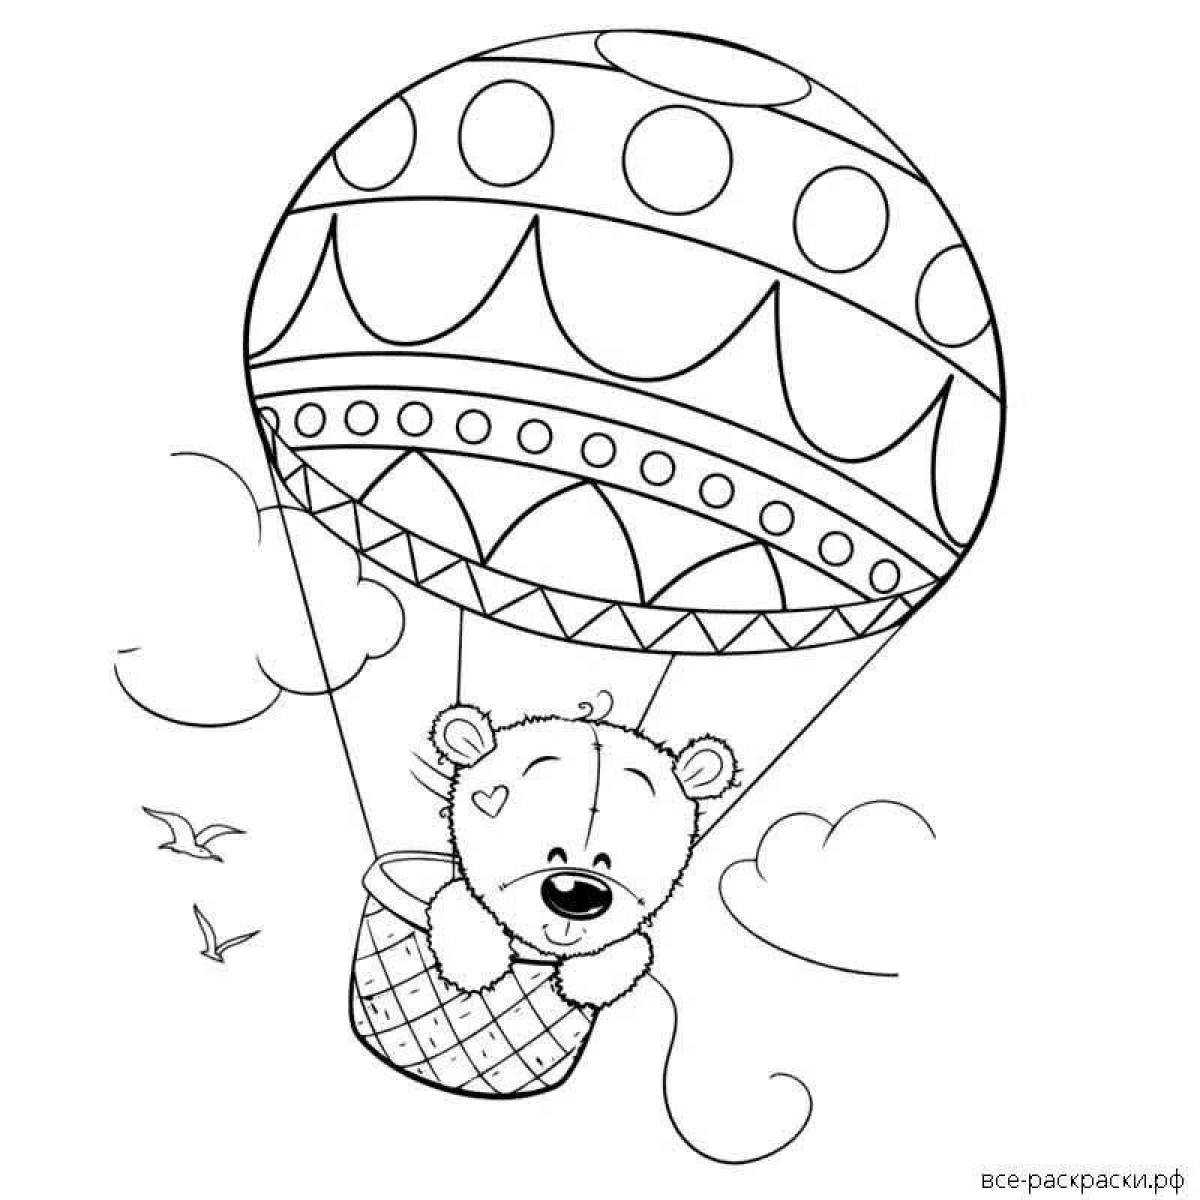 Playful teddy bear with balls